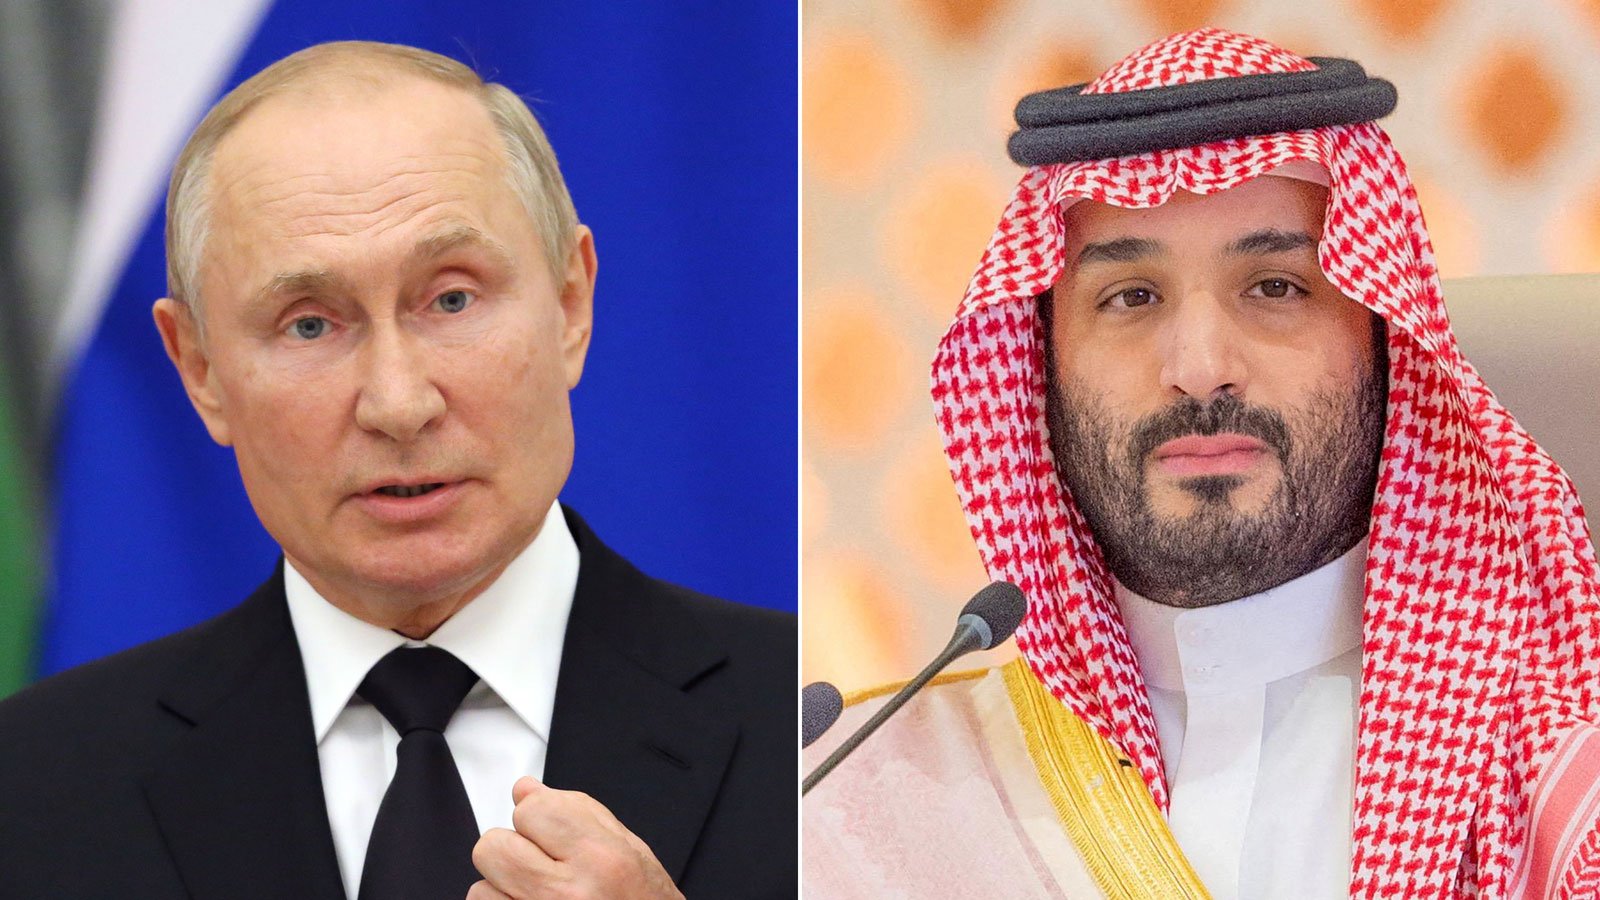 Putin, Saudi crown prince discuss trade, economic ties: Kremlin